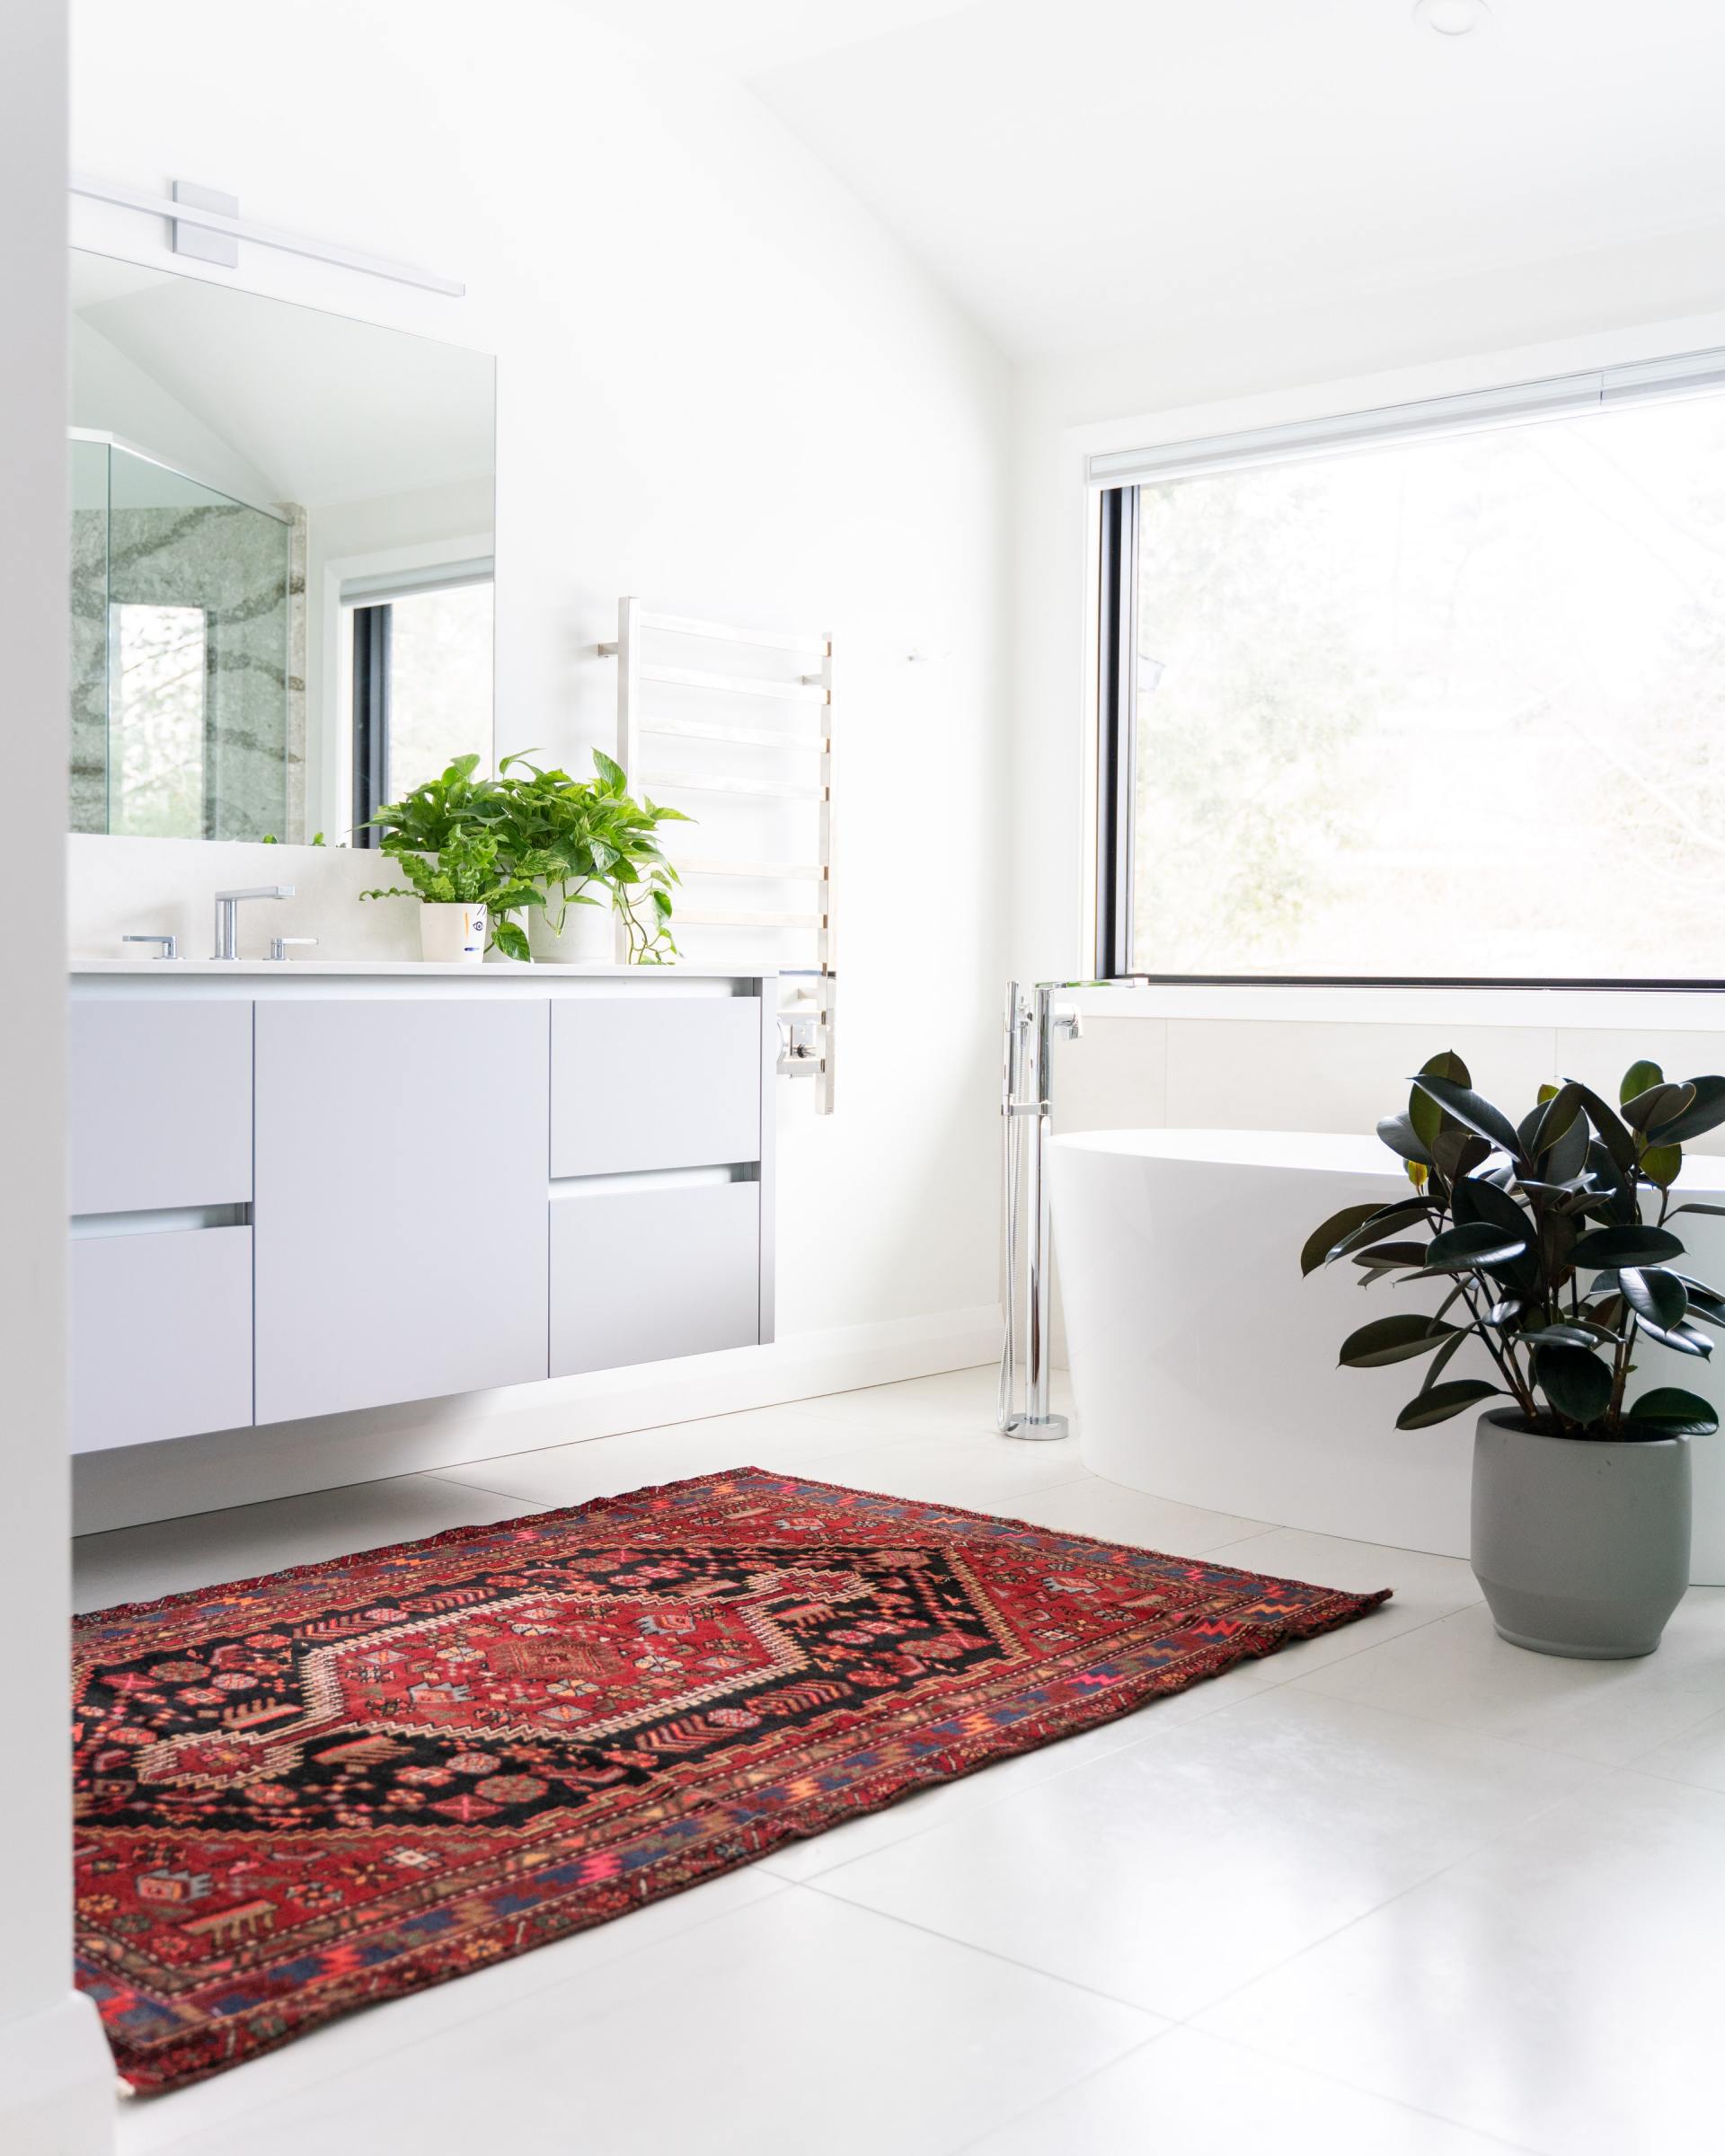 Floating White Vanity with Warm Persian Rug in Modern Bathroom